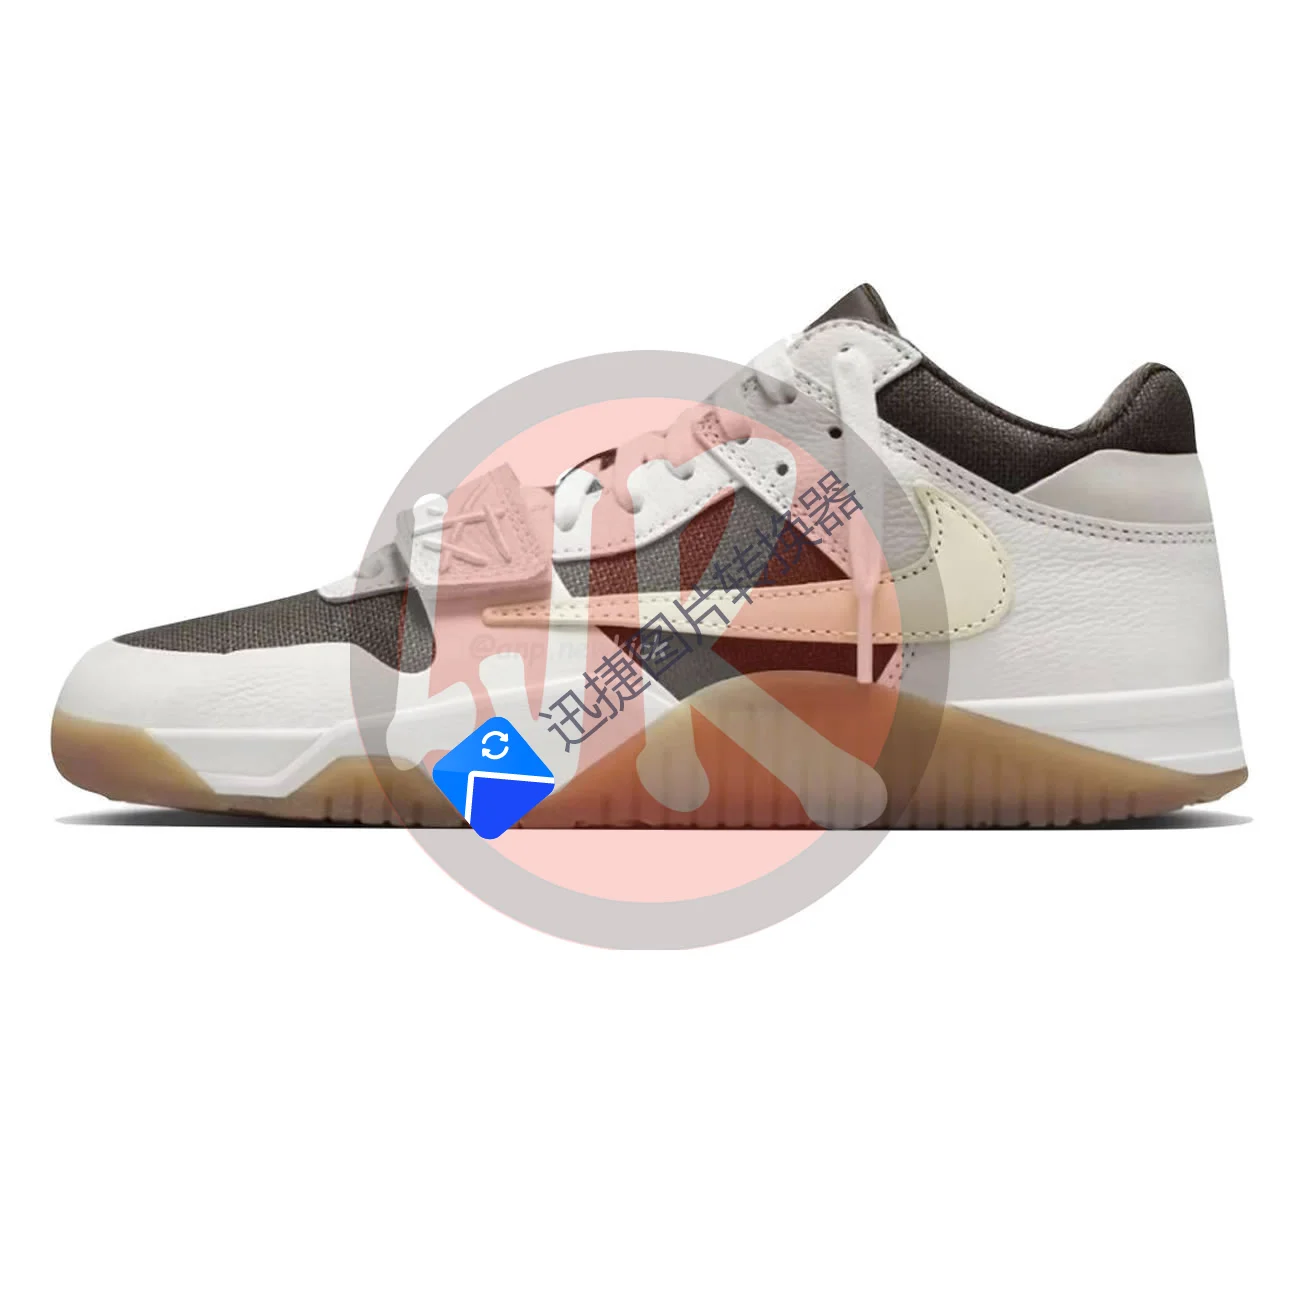 Travis Scott X Jordan Cut The Check Trainer Release Date Ljr Sneakers (20) - bc-ljr.com